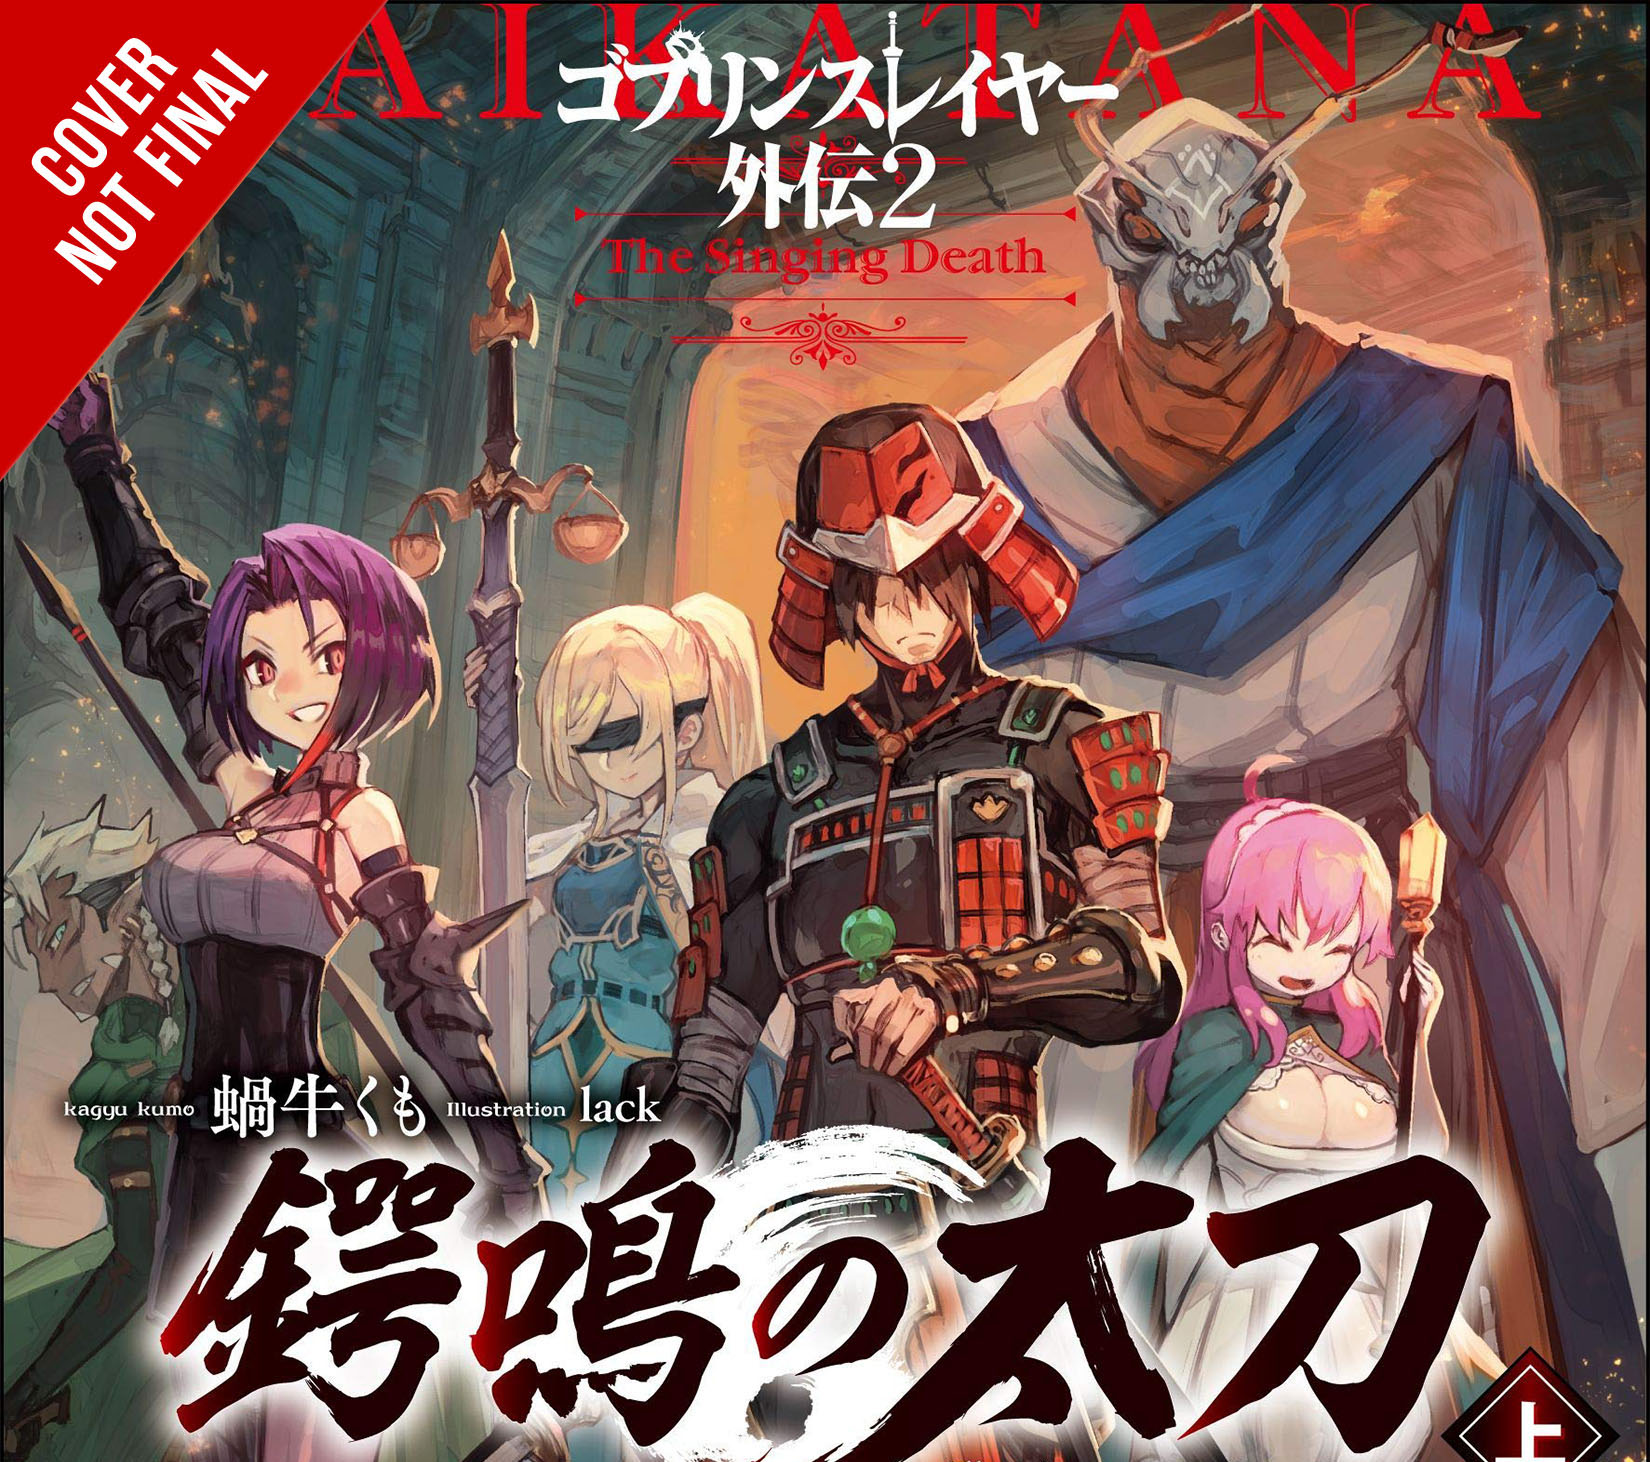 Yen Press announces 6 new manga acquisitions for future release